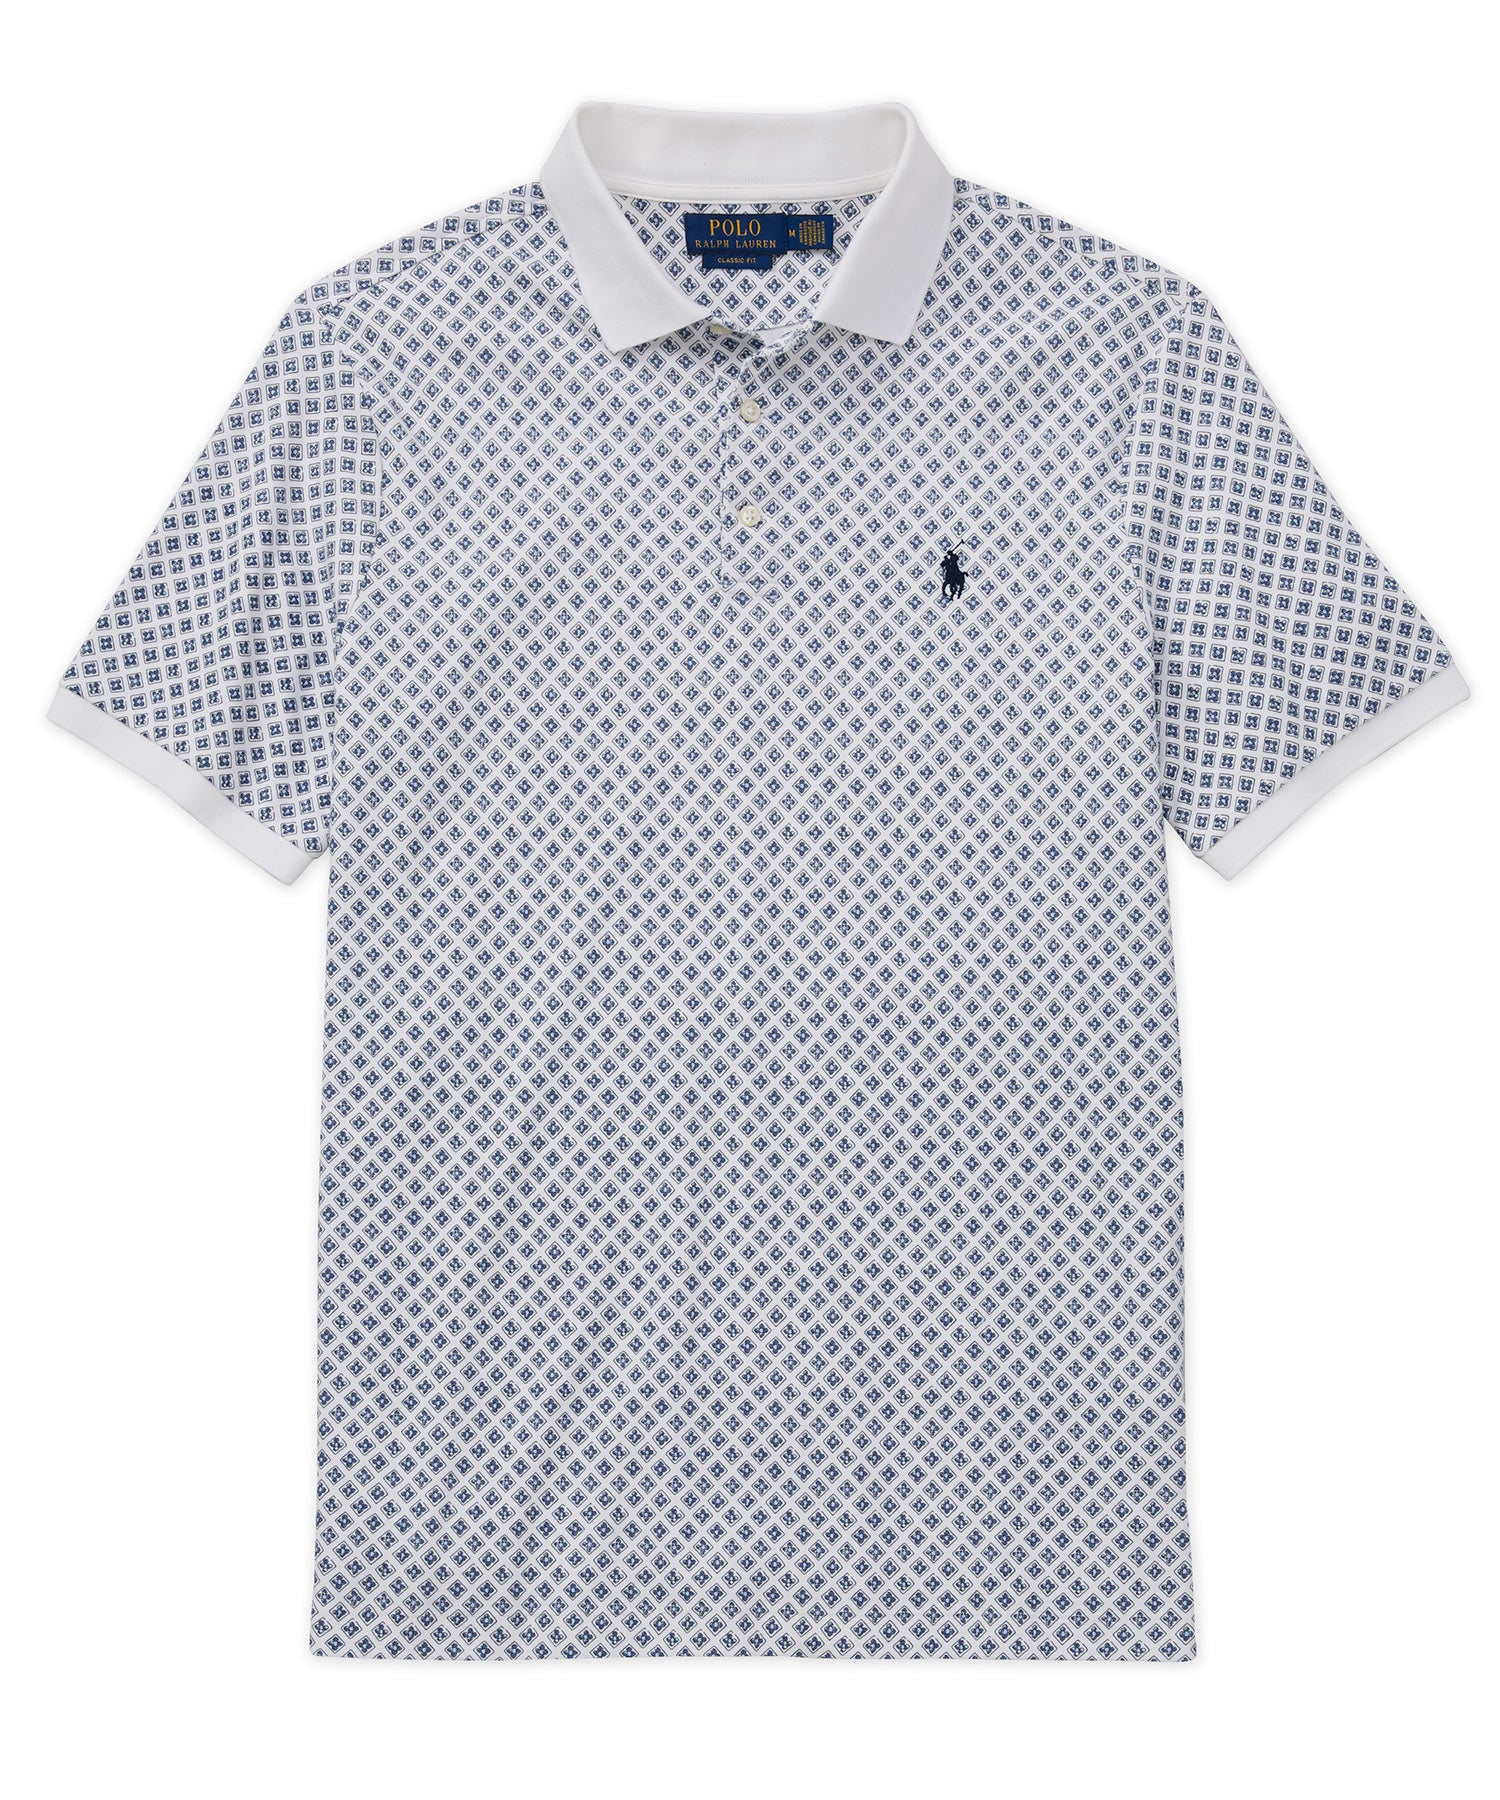 Polo Ralph Lauren Short Sleeve Soft Touch Animated Print Polo Knit Shirt, Men's Big & Tall